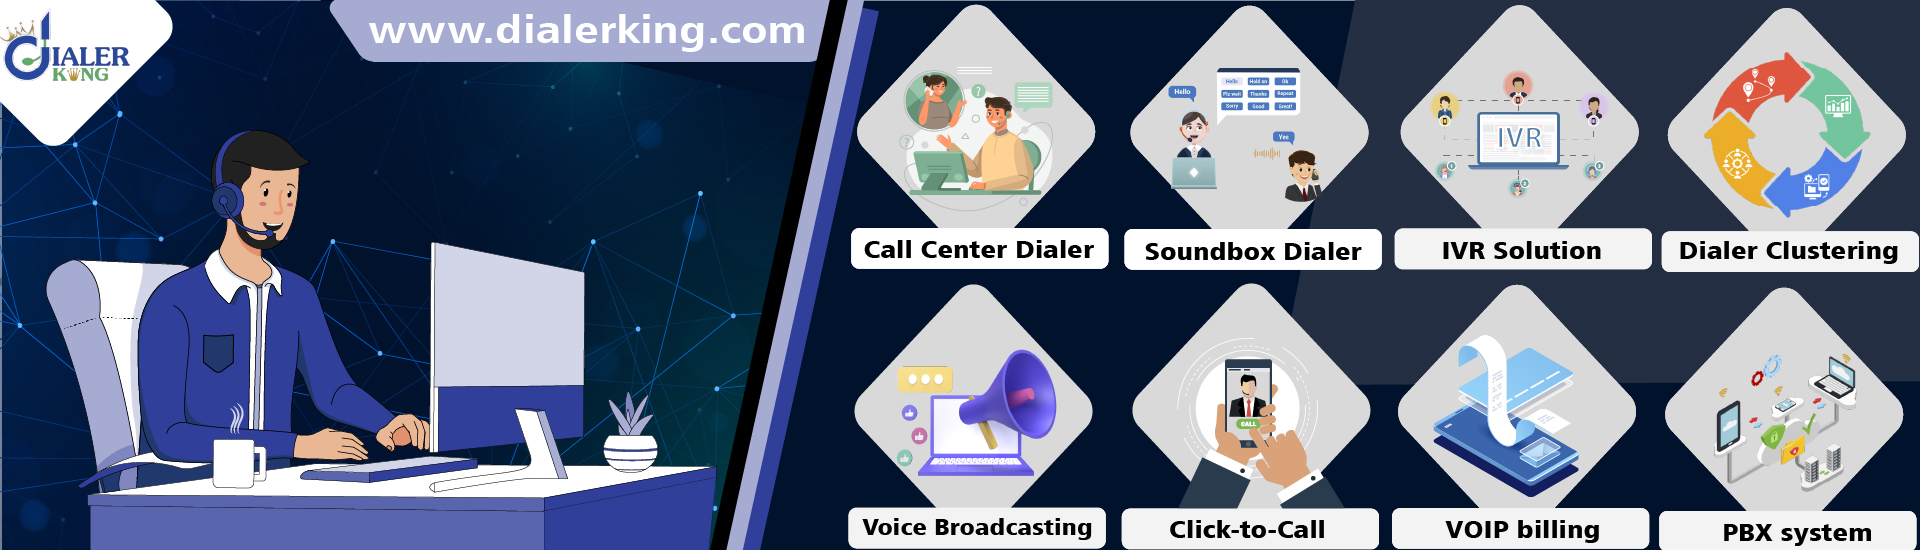 Call Center Dialer Soundbox Dialer IVR Solution

 

Voice Broadcasting VOIP billing PBX system